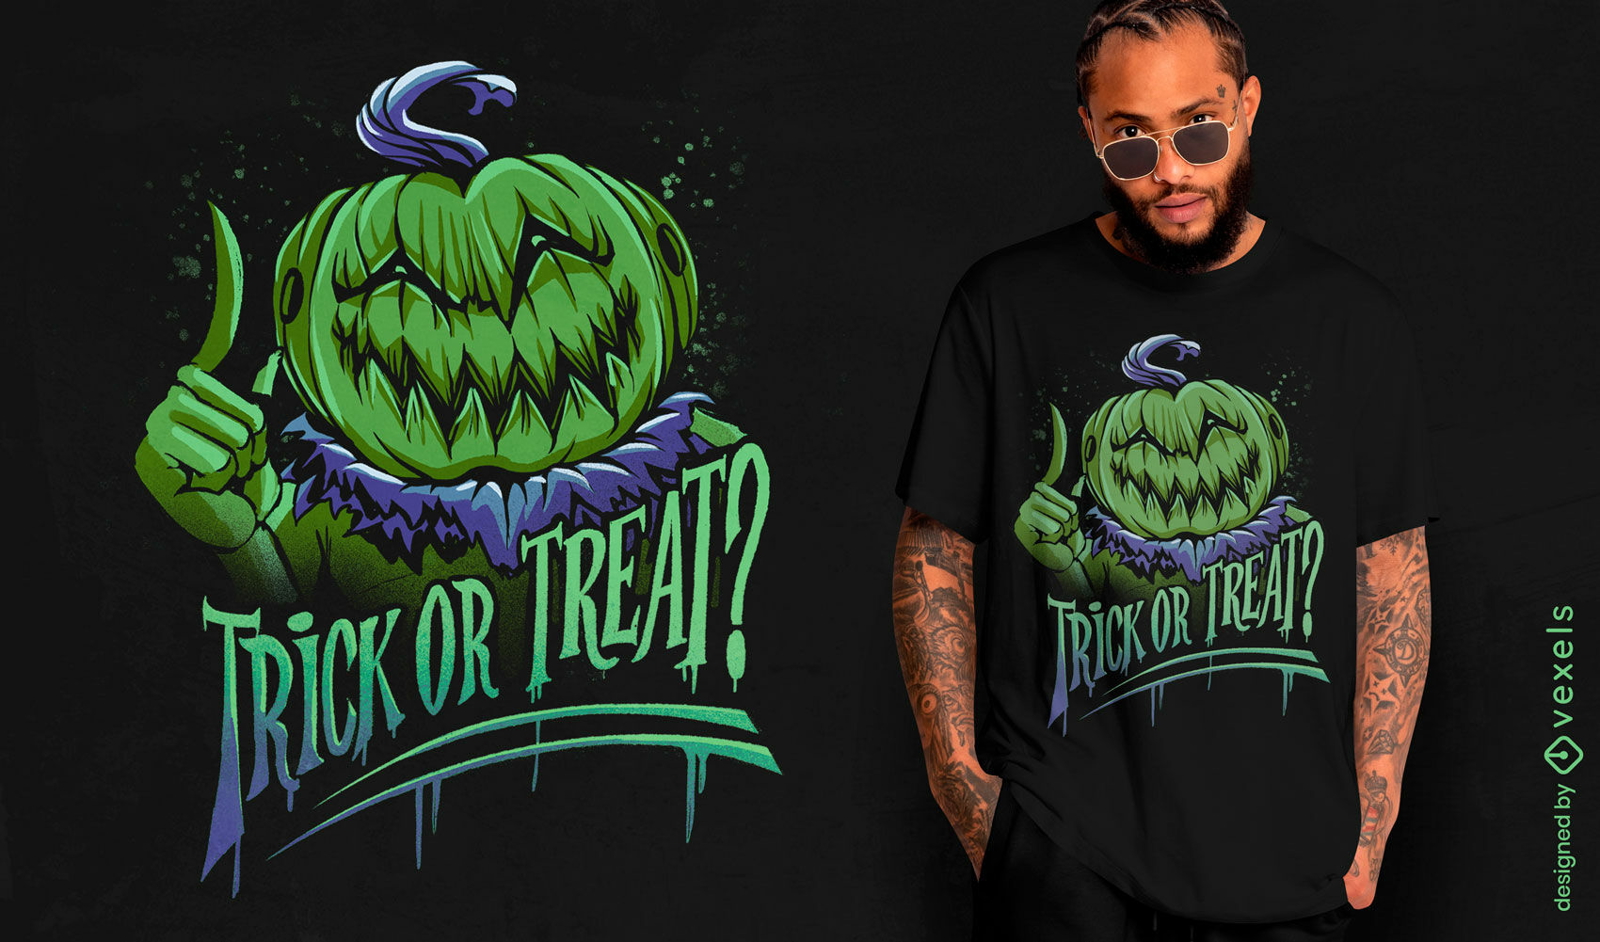 Jack O Lantern Halloween T-Shirt PSD